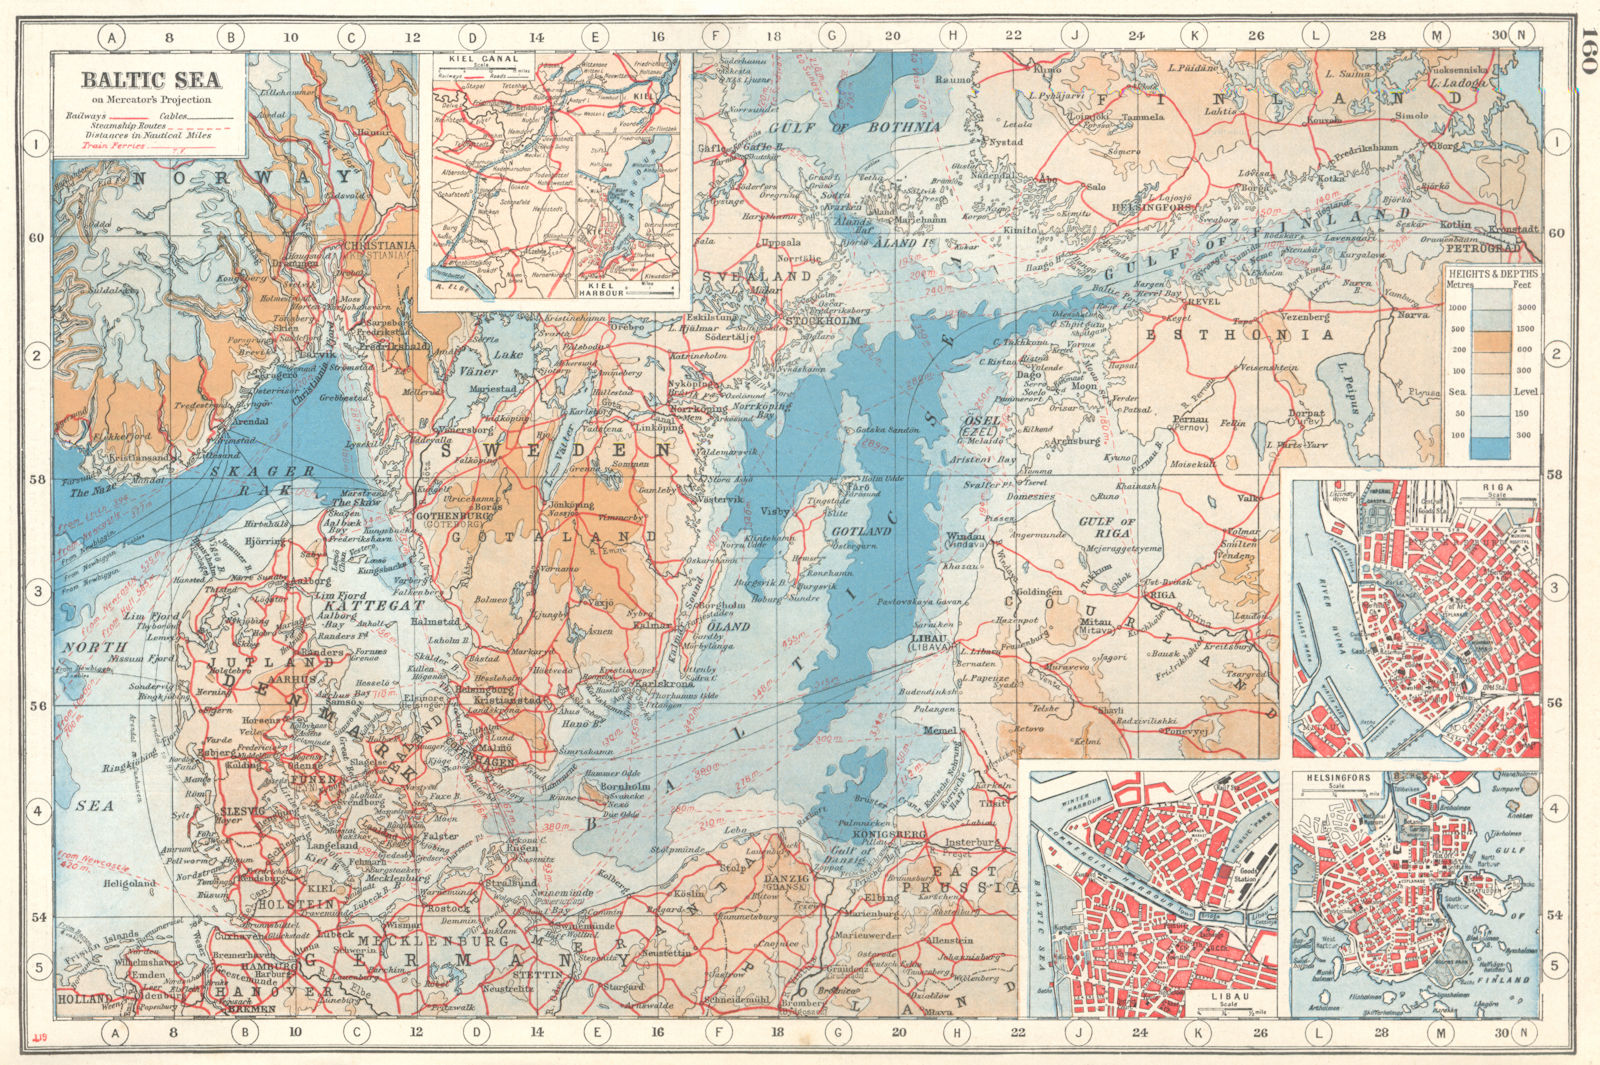 BALTIC SEA. inset Kiel Canal; Riga; Libau (Liepaja); Helsinki 1920 old map